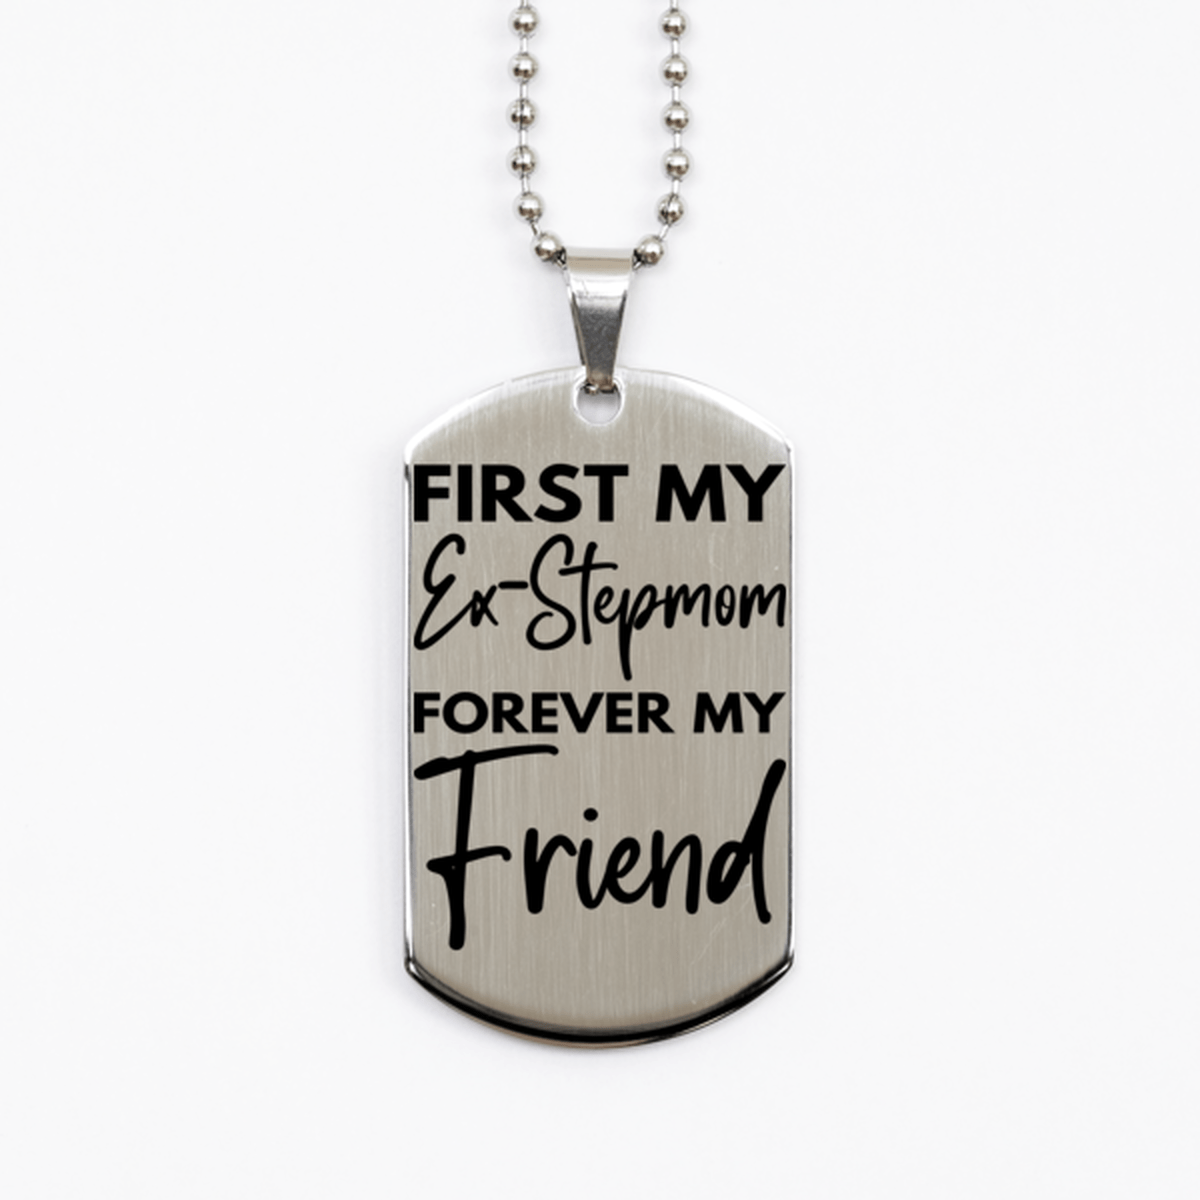 Inspirational Ex-Stepmom Silver Dog Tag Necklace, First My Ex-Stepmom Forever My Friend, Best Birthday Gifts for Ex-Stepmom